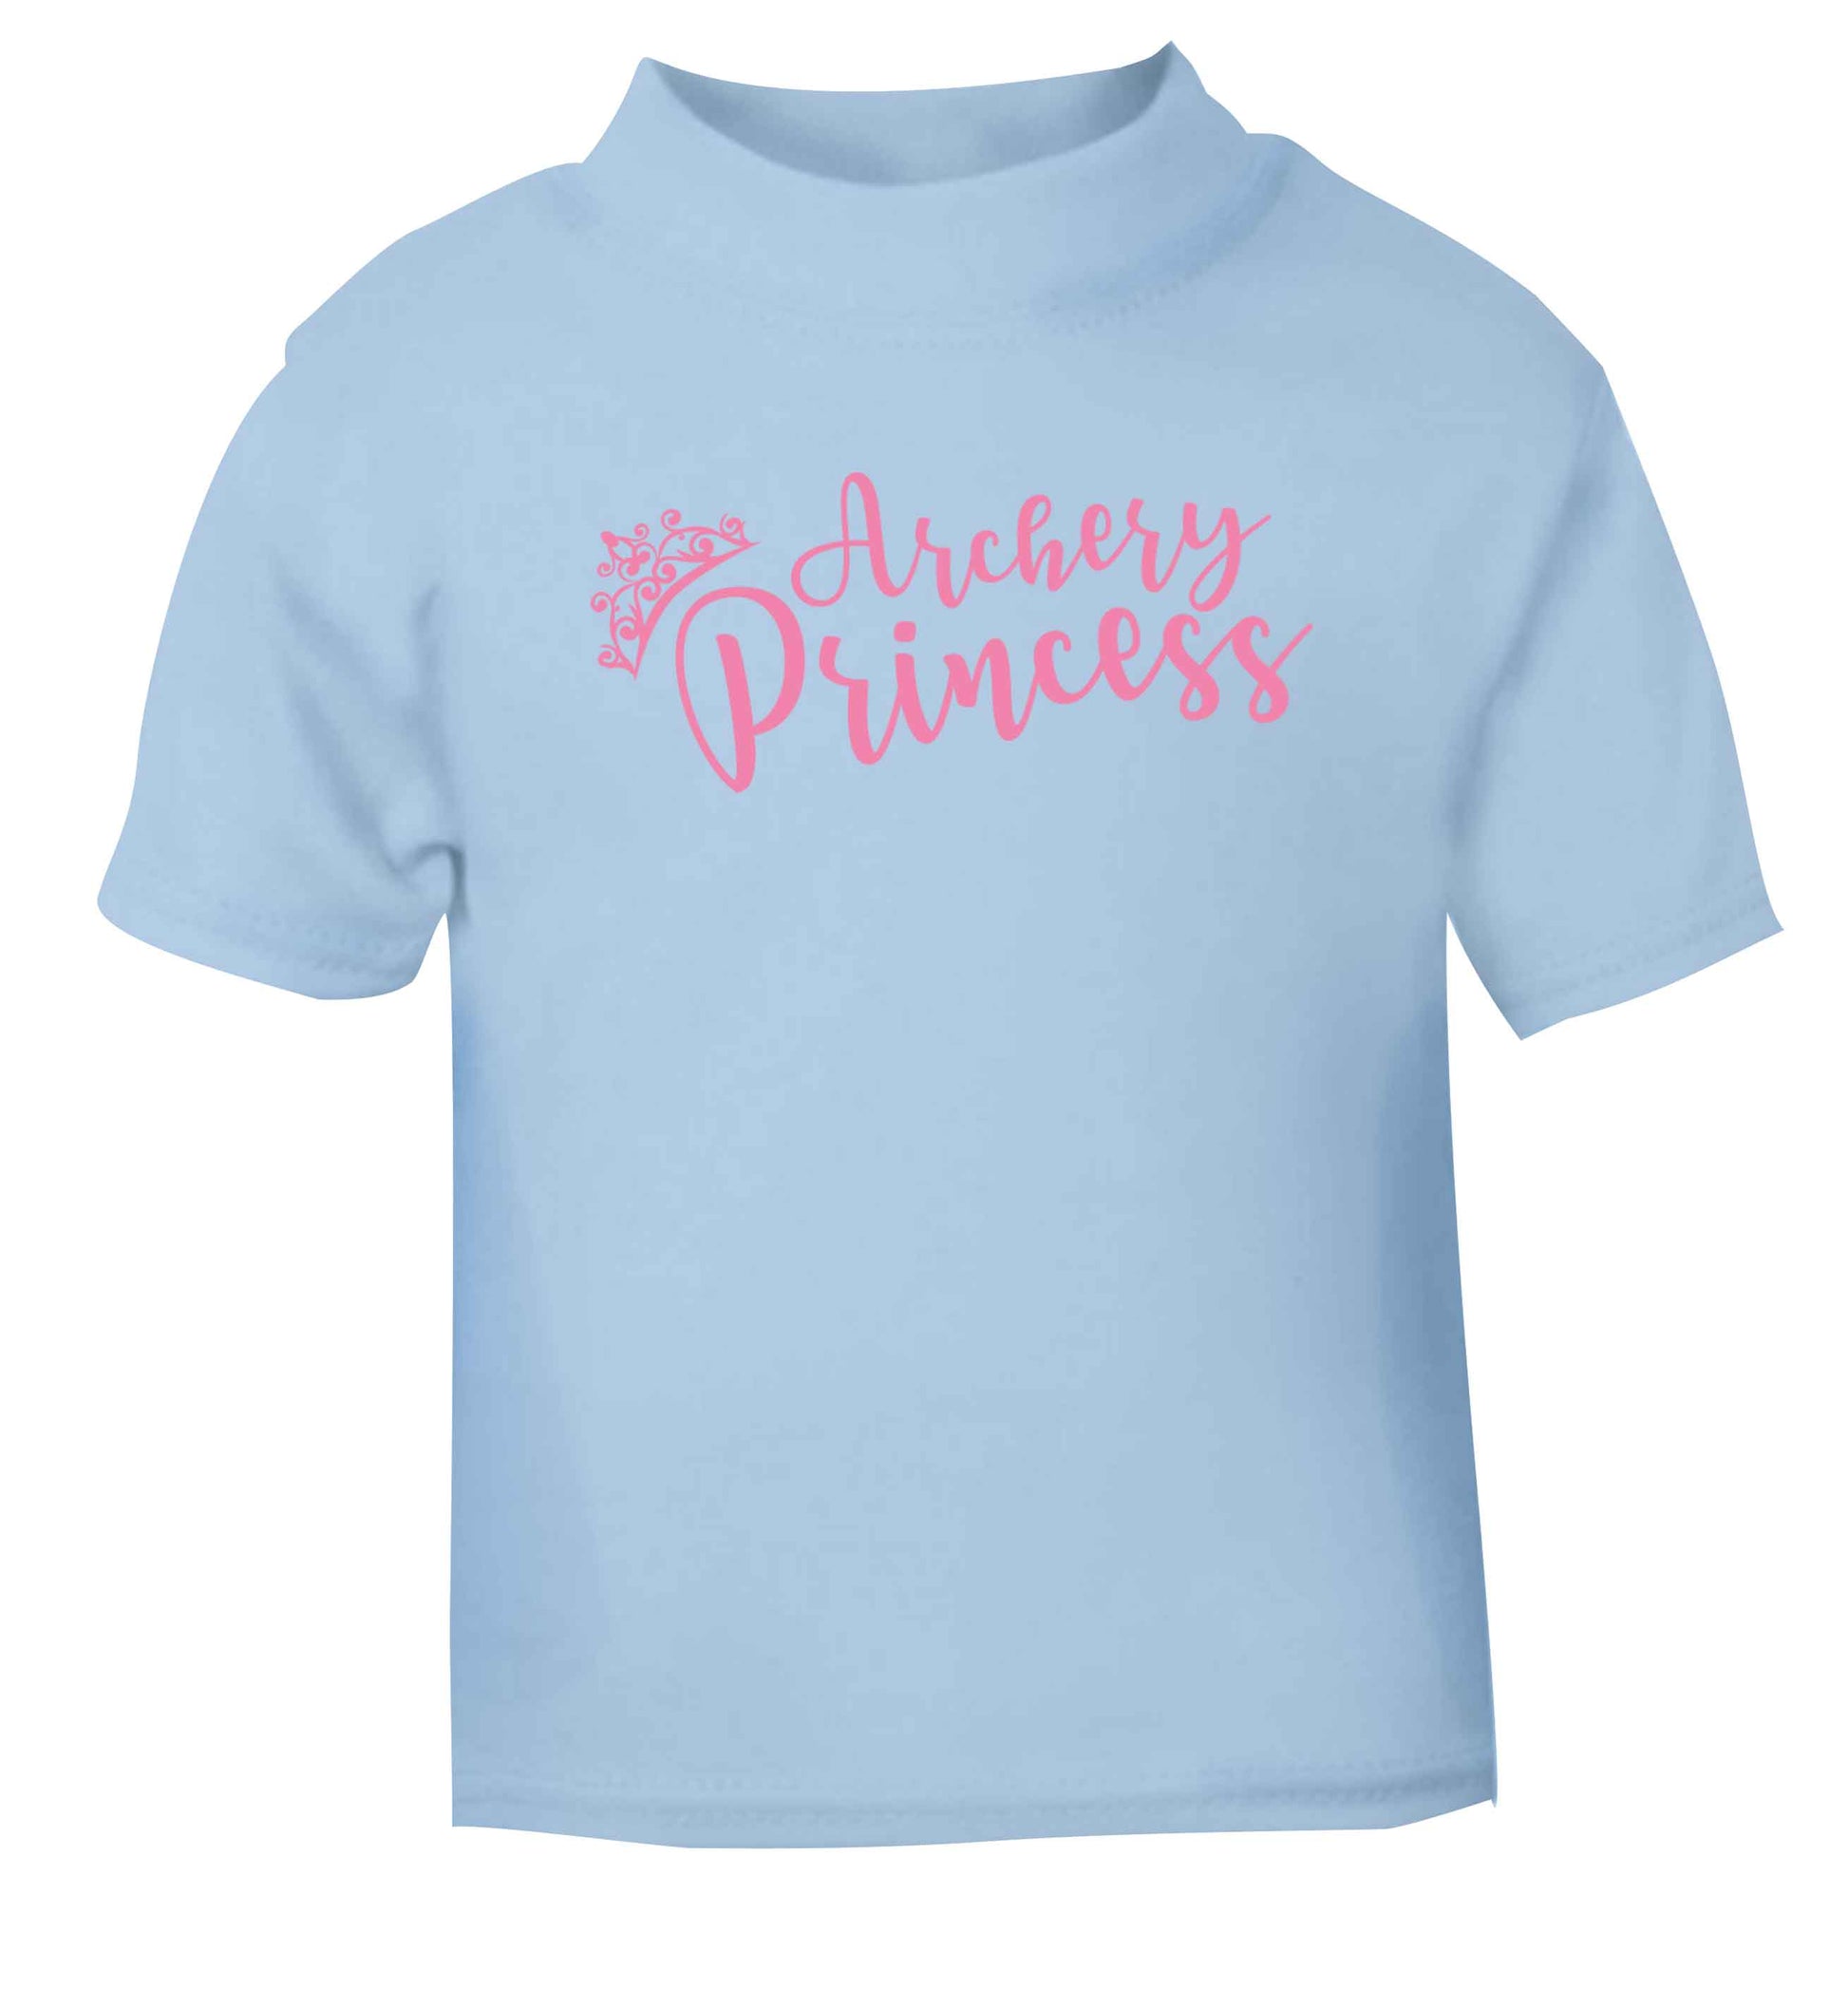 Archery princess light blue Baby Toddler Tshirt 2 Years